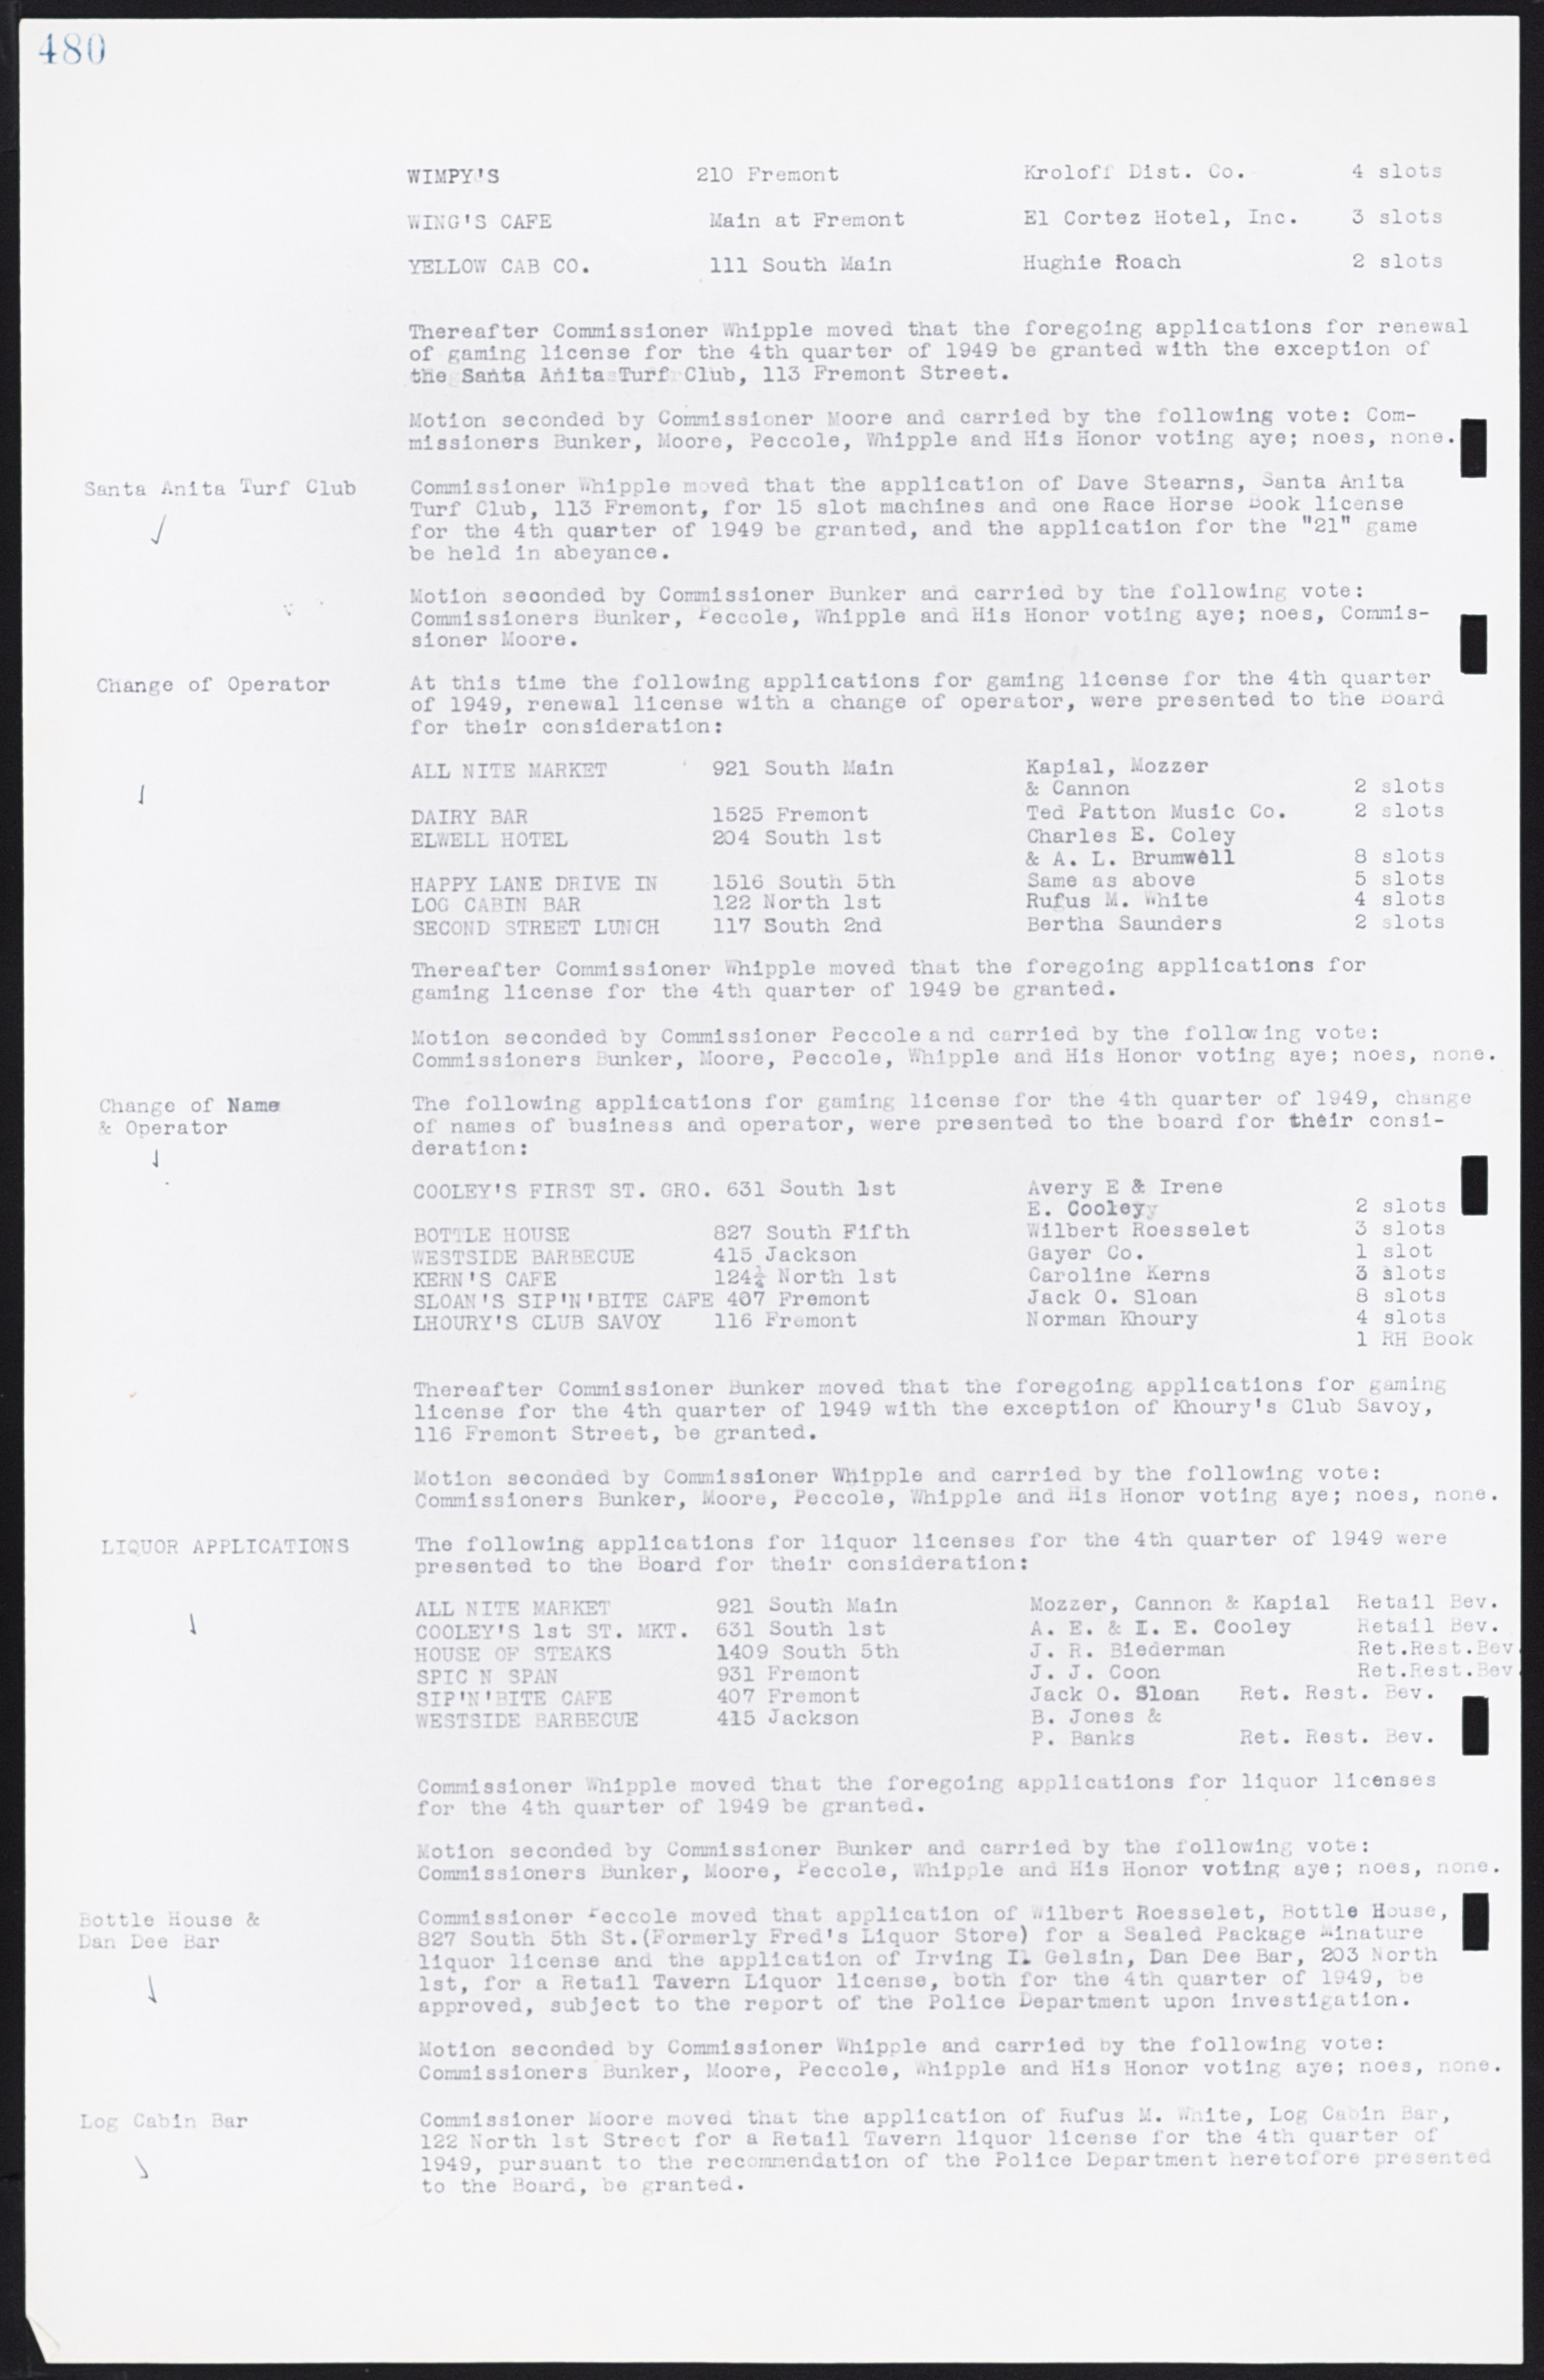 Las Vegas City Commission Minutes, January 7, 1947 to October 26, 1949, lvc000006-512